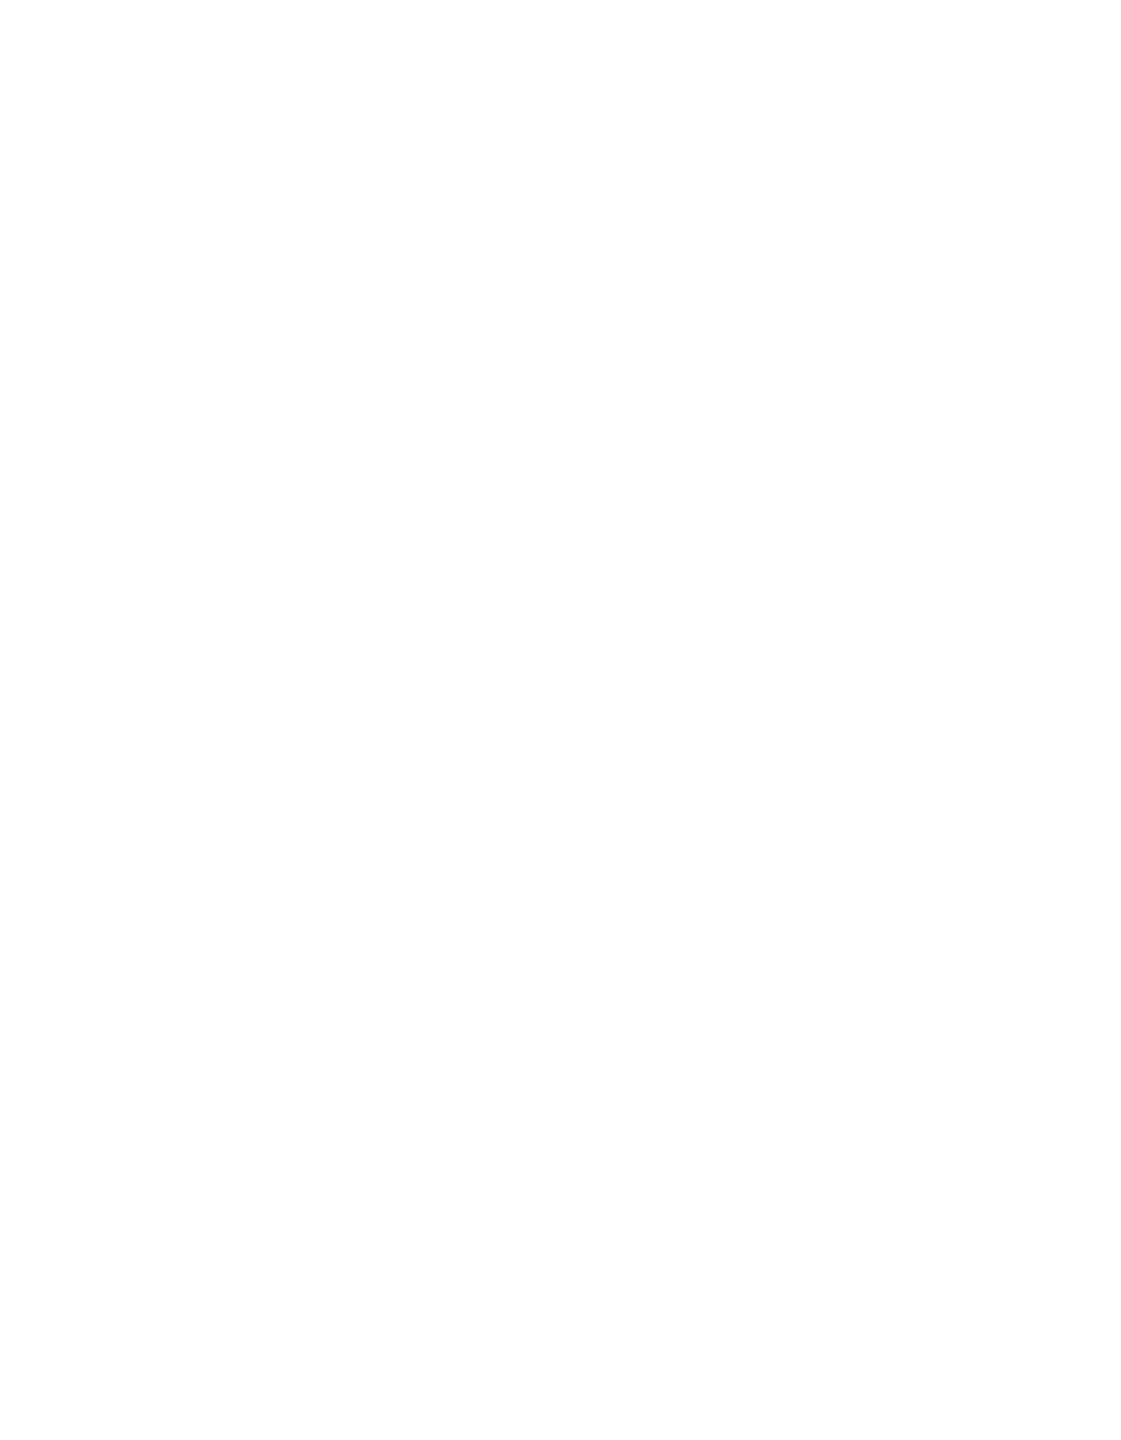 Formagraine